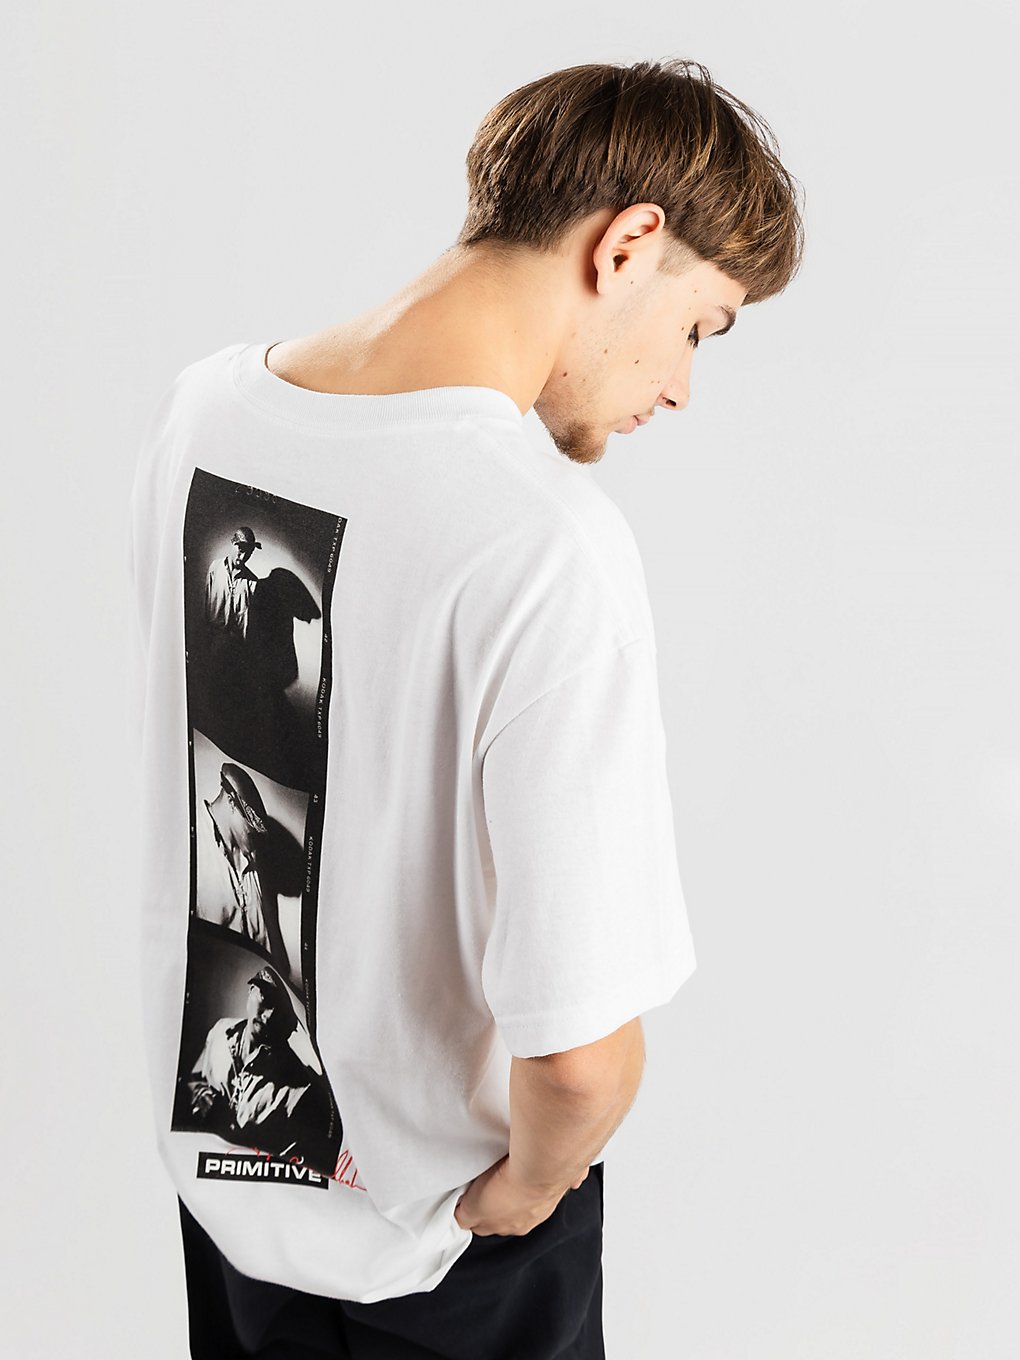 Primitive X Tupac Shadows T-Shirt white kaufen